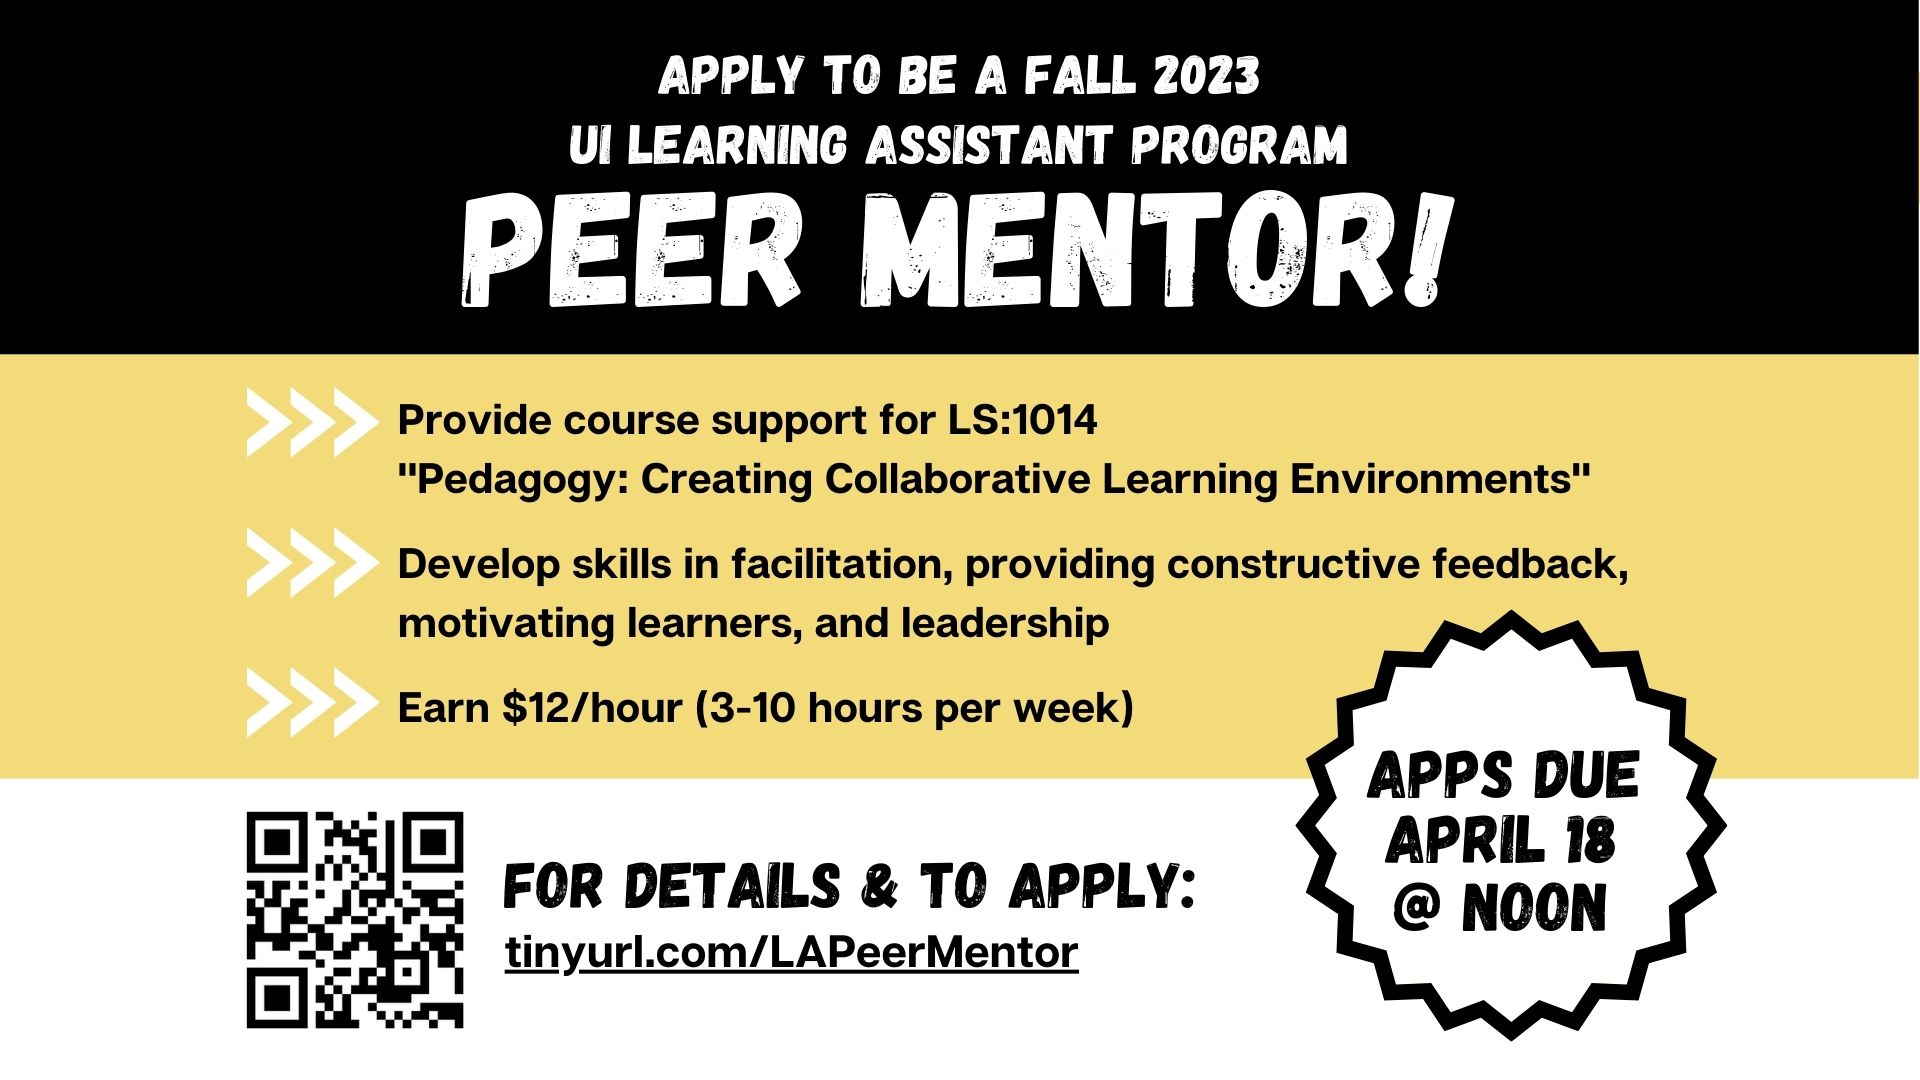 Seeking Peer Mentors for Fall 2023!